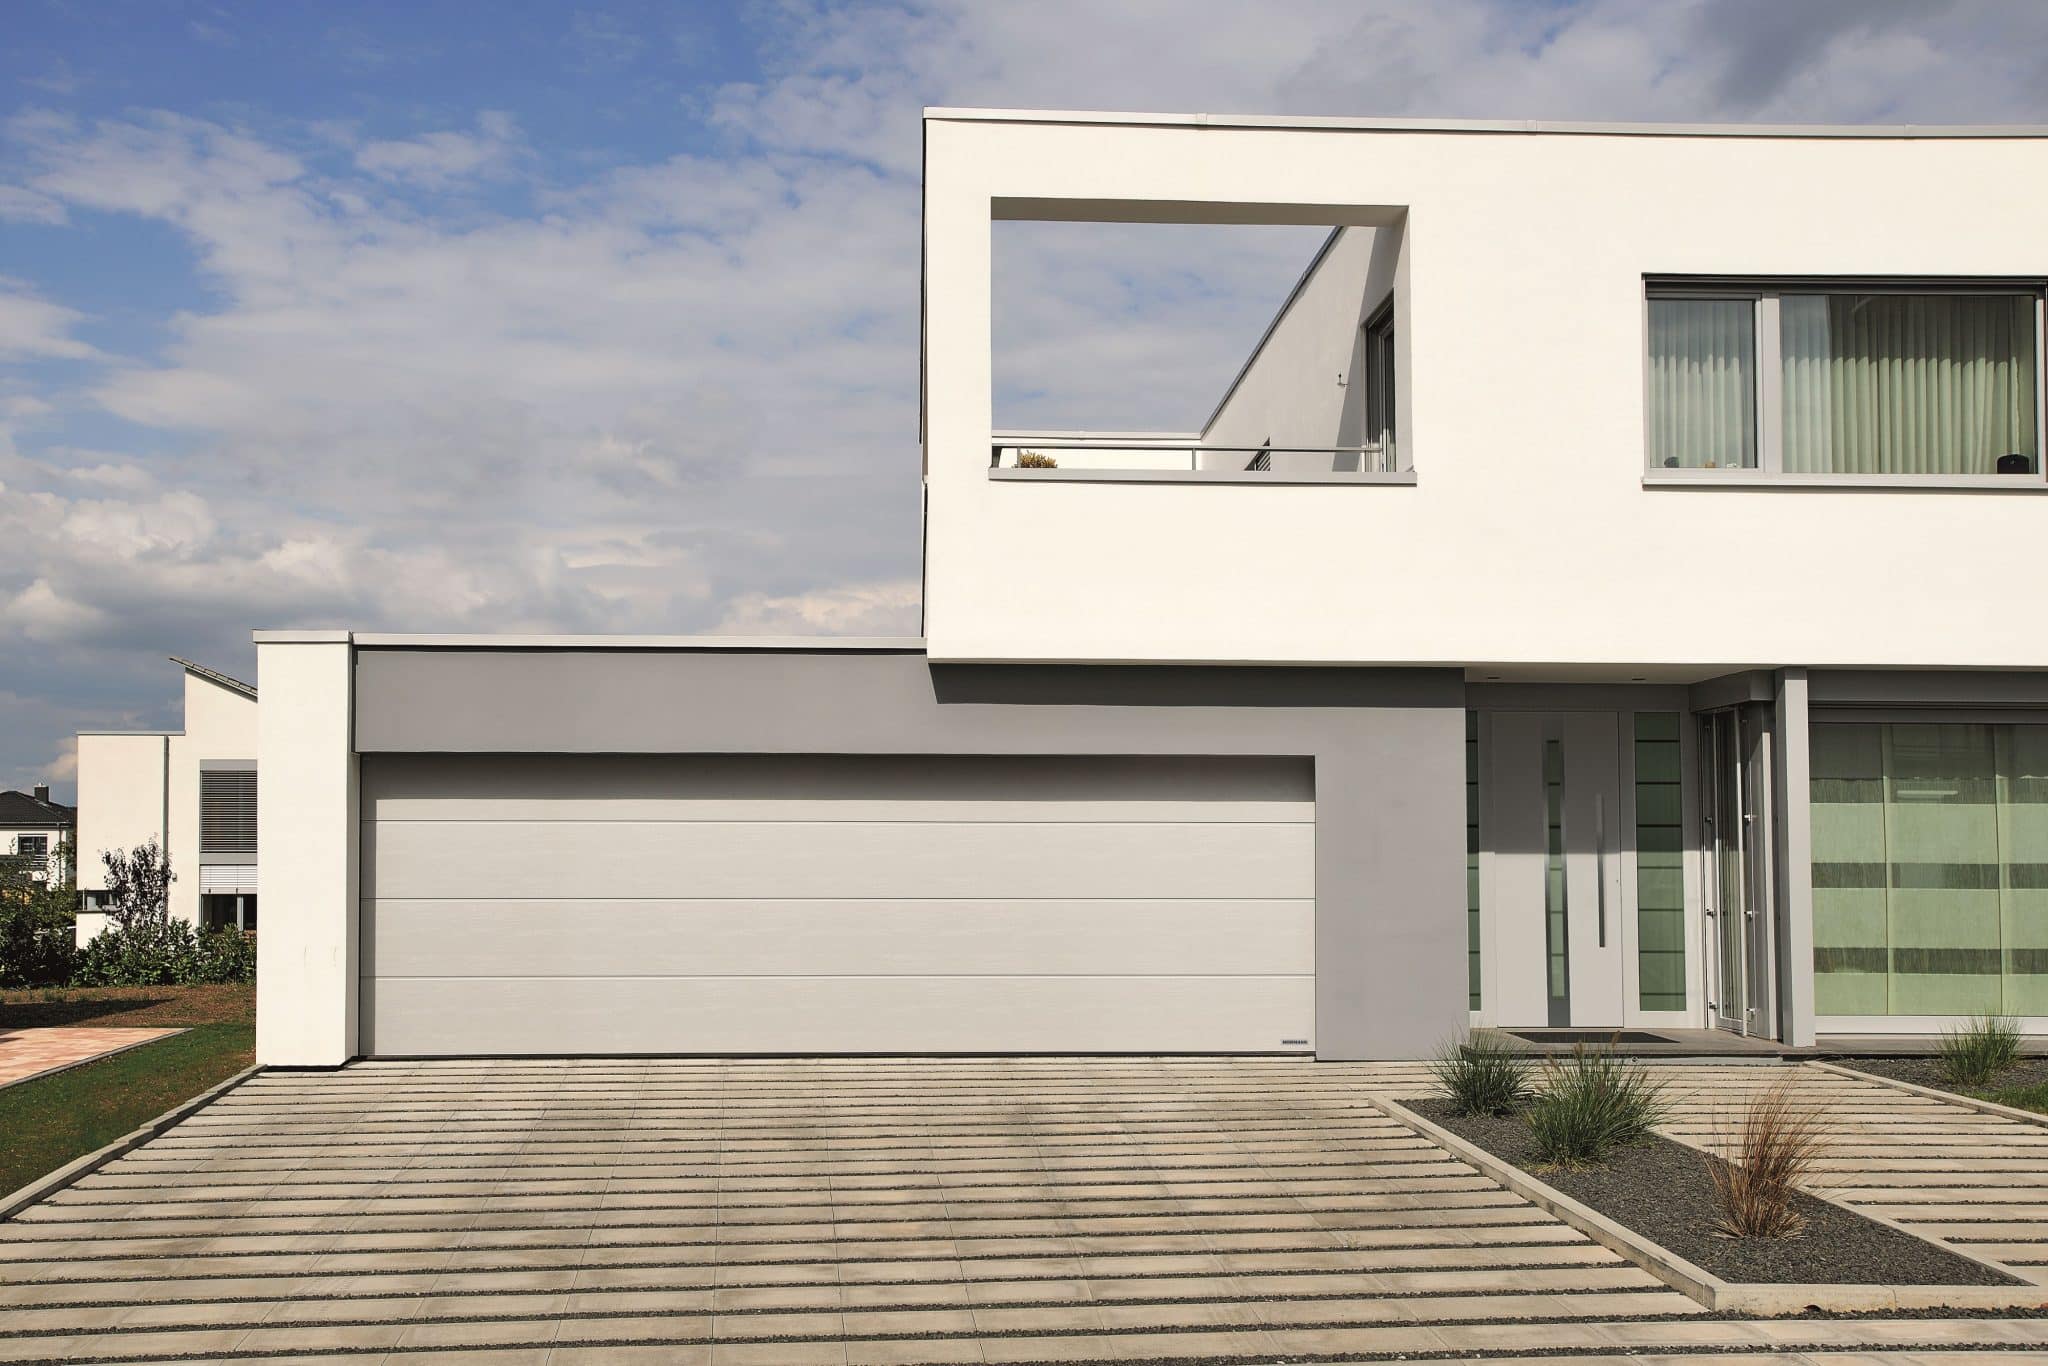 Kako izbrati najboljša garažna vrata za vaš dom?